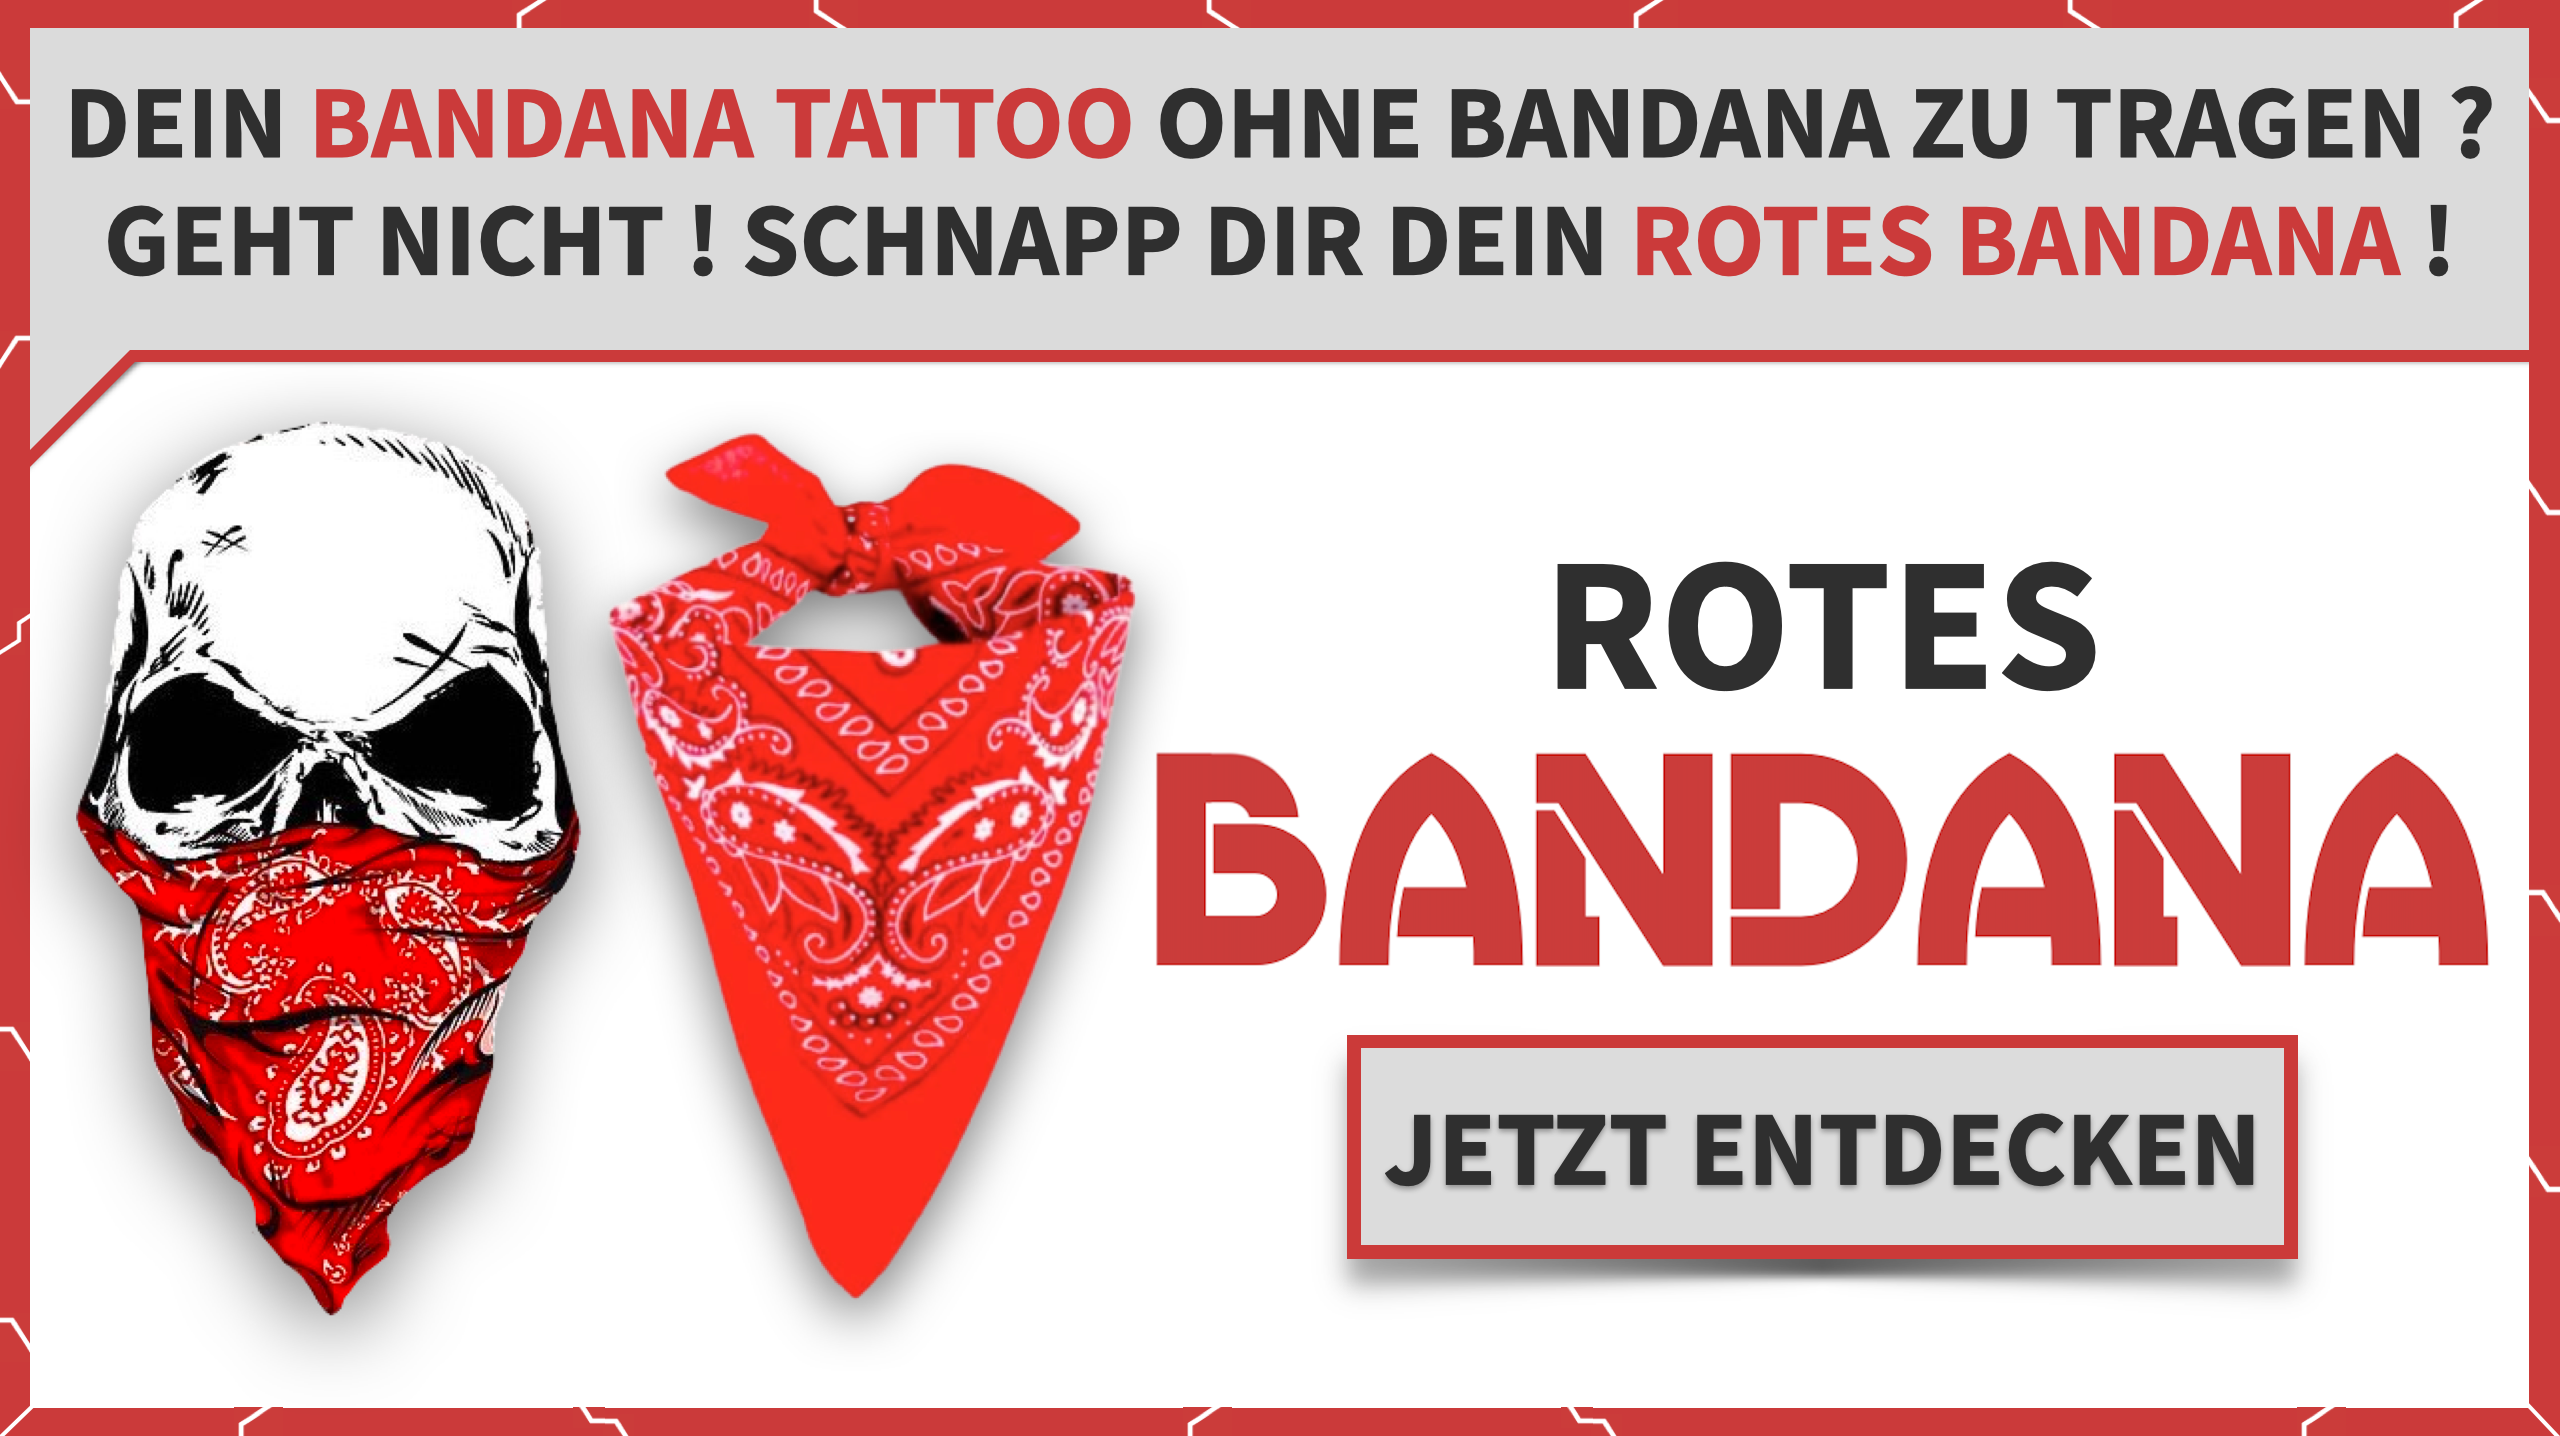 Bandana Tattoo ohne Bandana ?